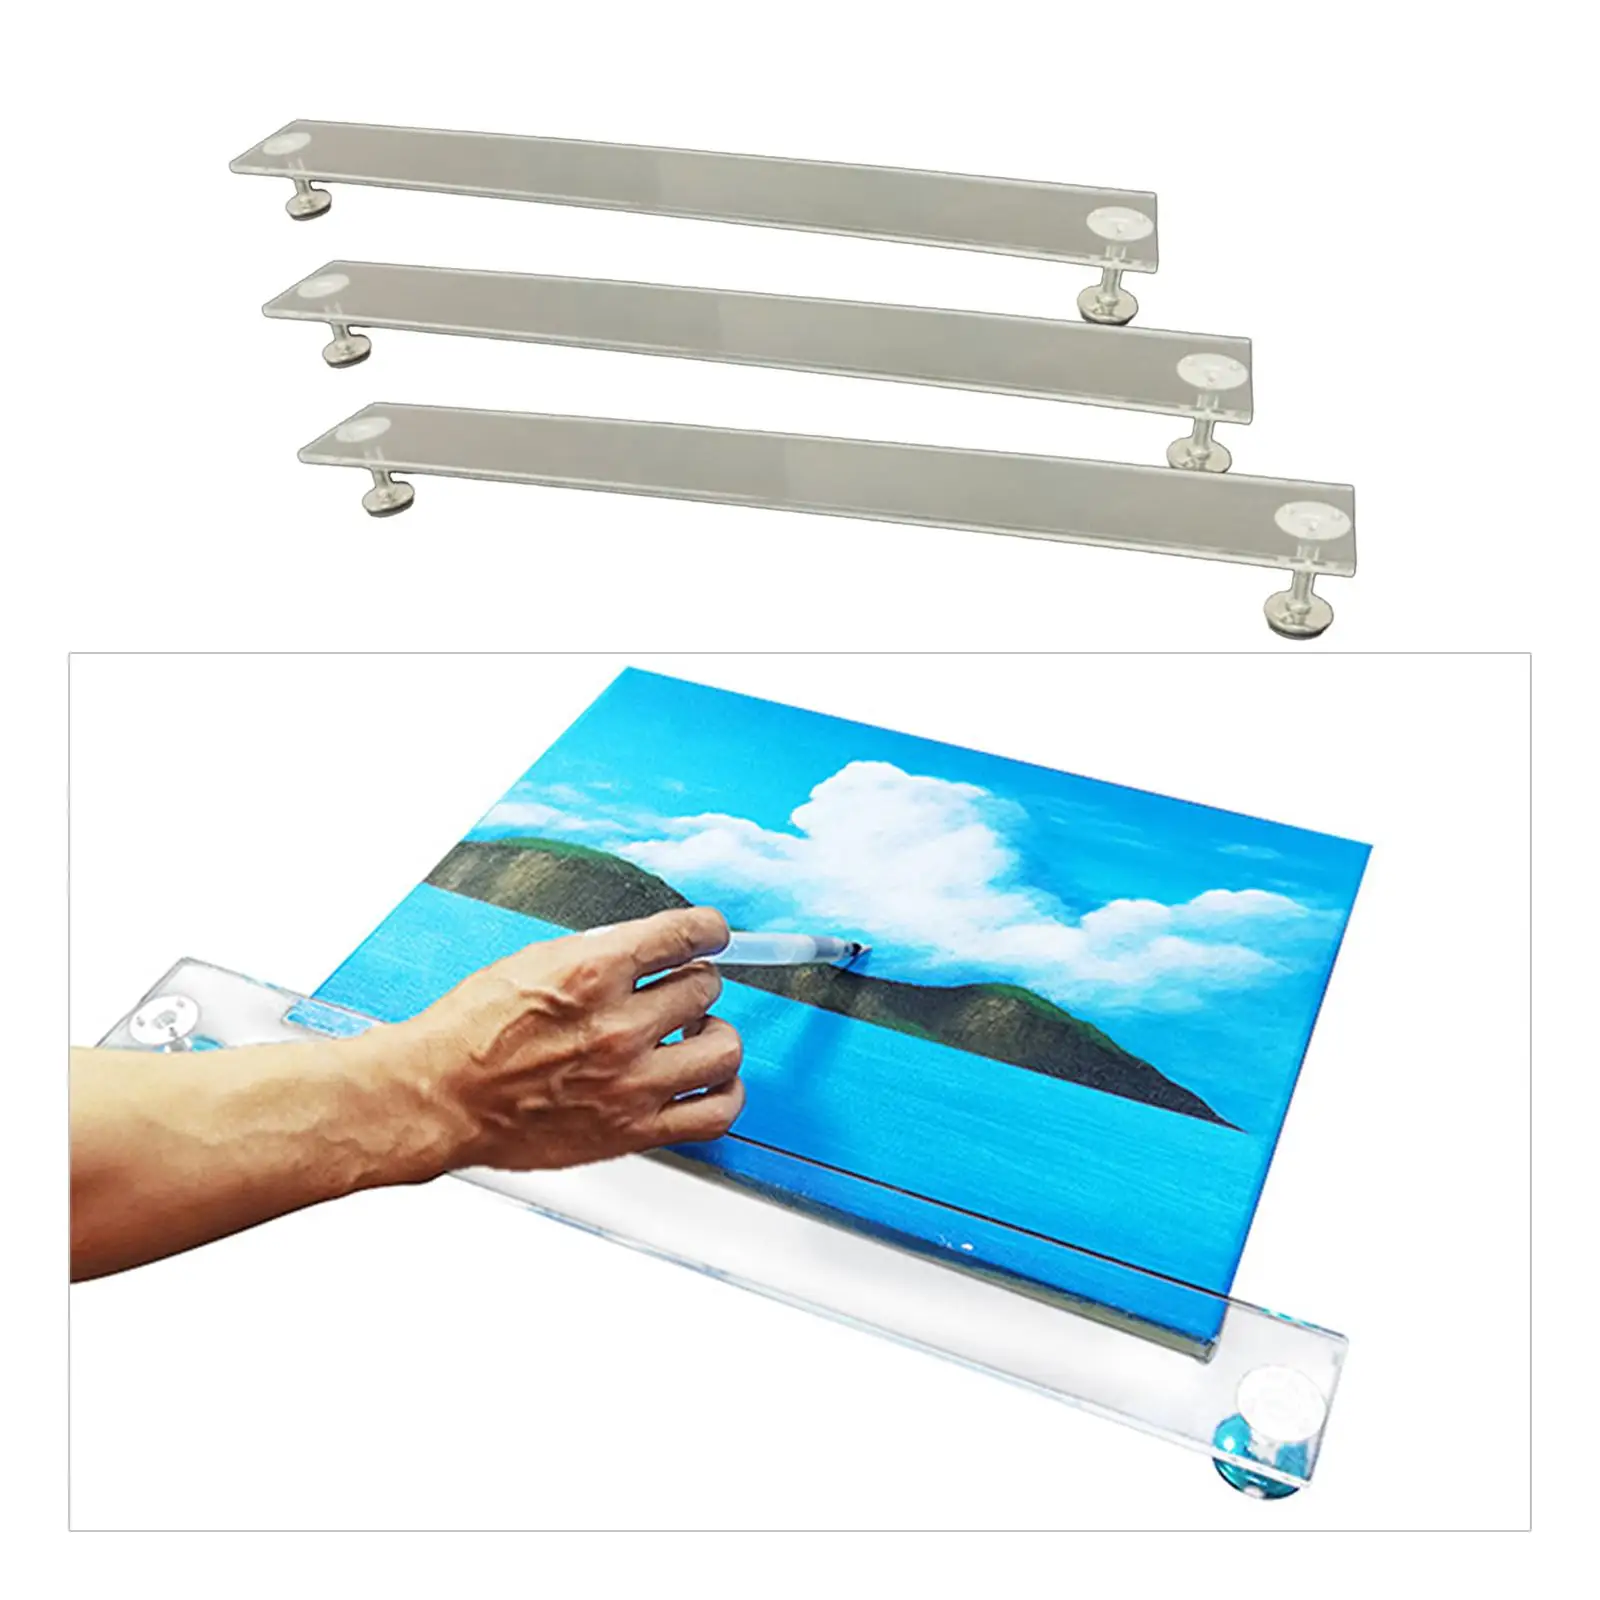 Artist Leaning Bridge Acrylic Rack Sturdy for Home Studio Drawing Palm Rest Shelf Wrist Protection Height Adjustable Artist Tool